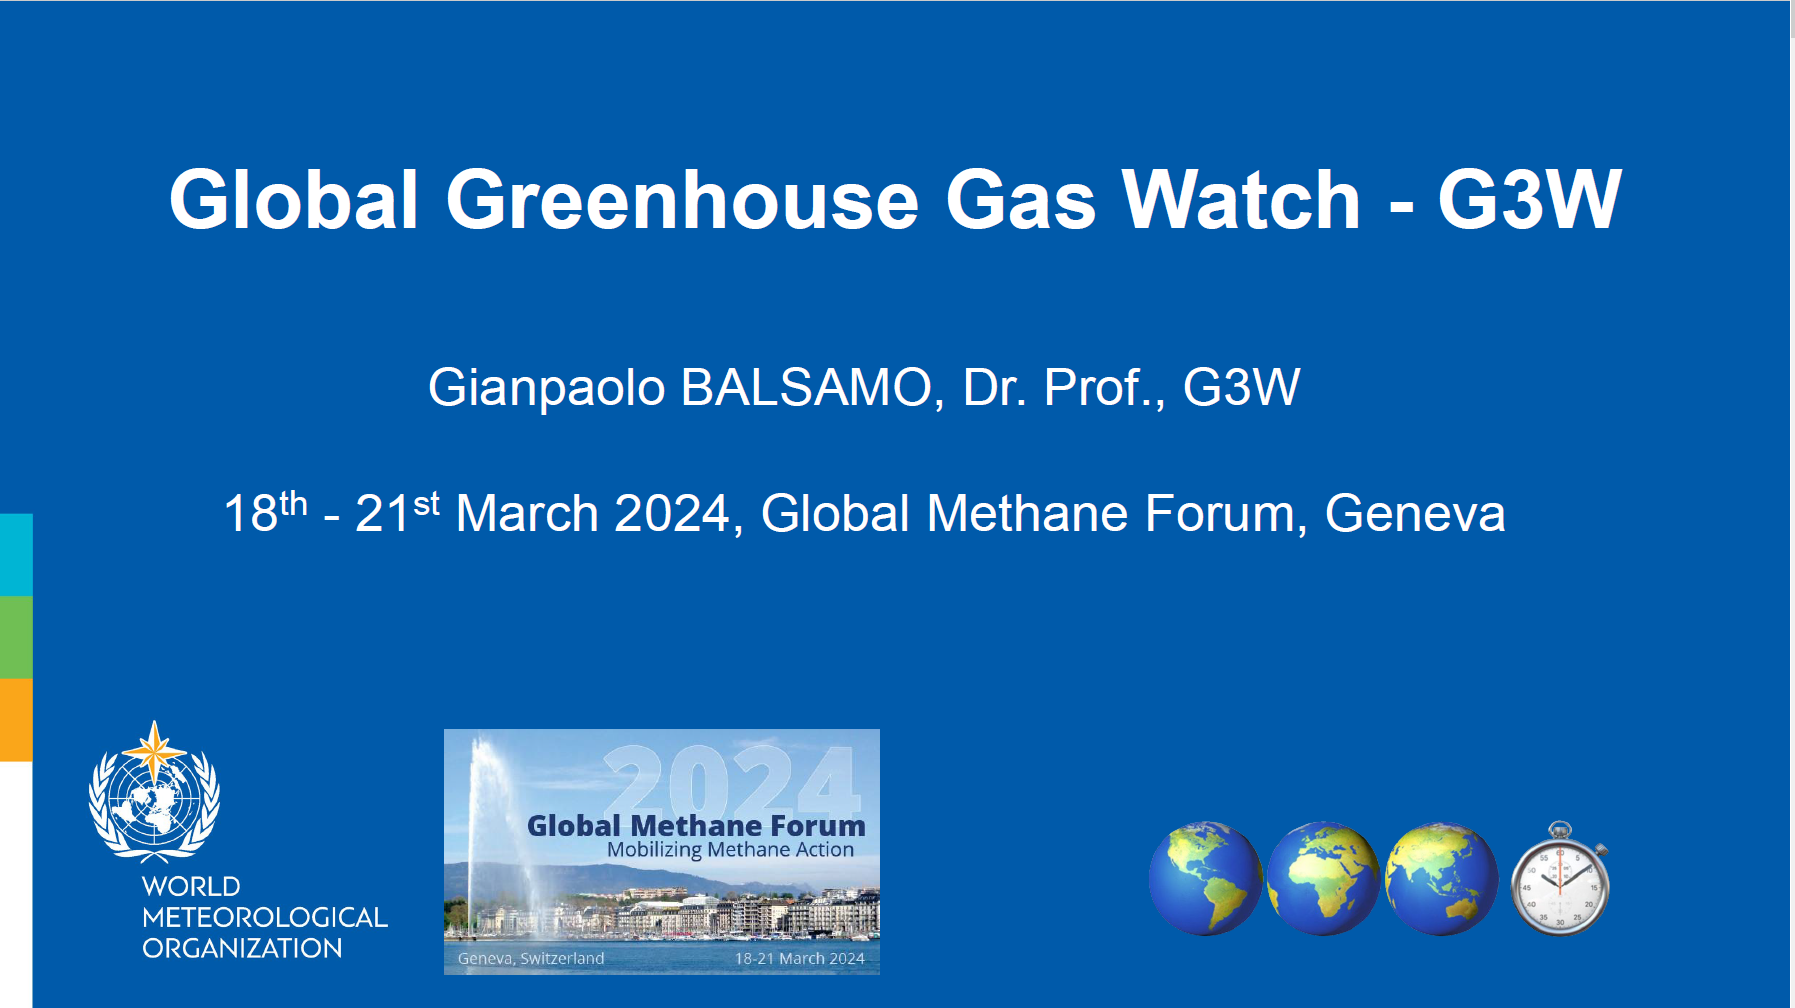 Global Greenhouse Gas Watch - G3W